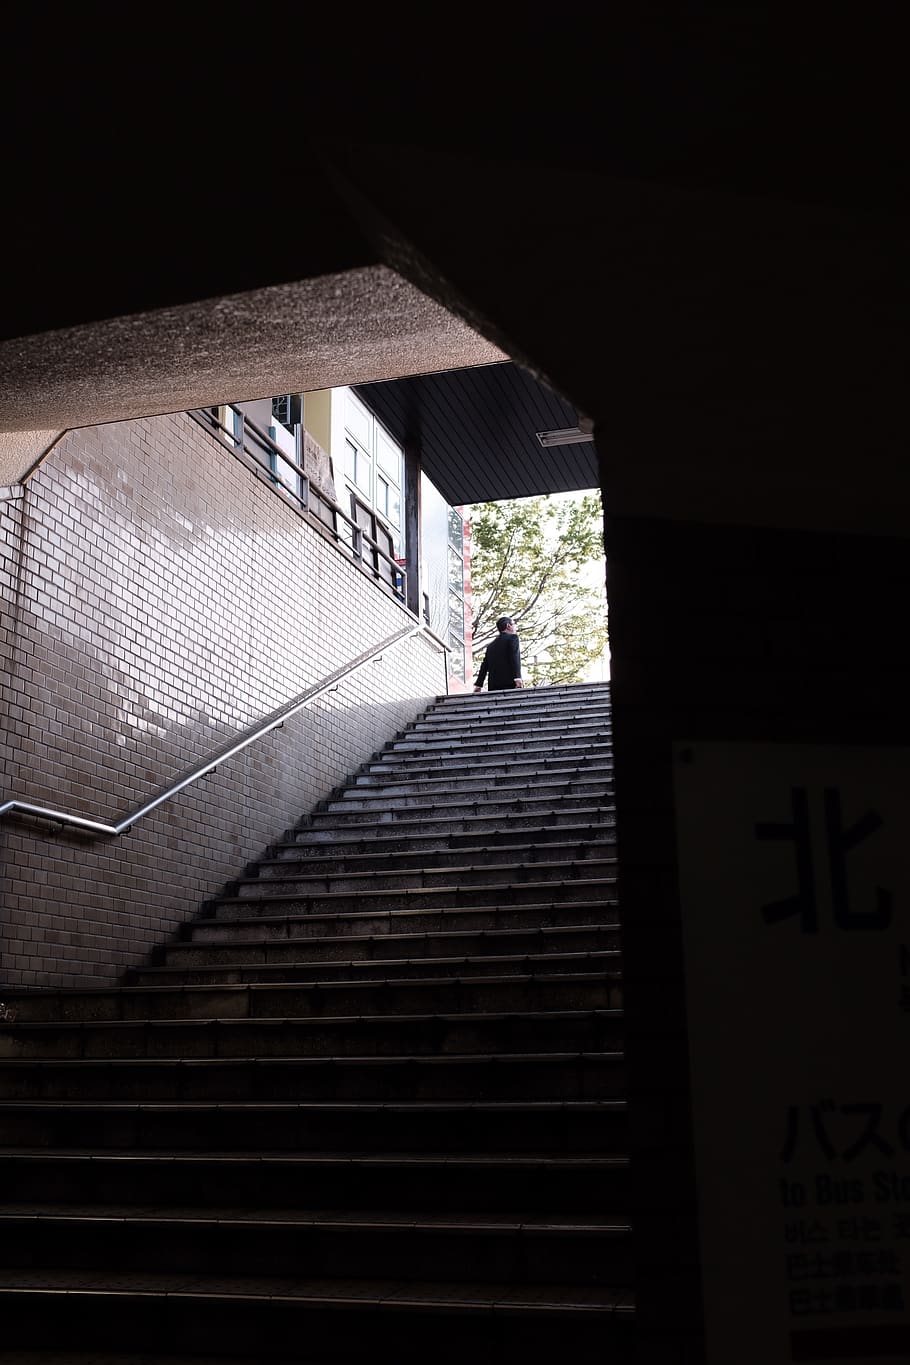 handrail, banister, staircase, human, person, japan, matsuyama